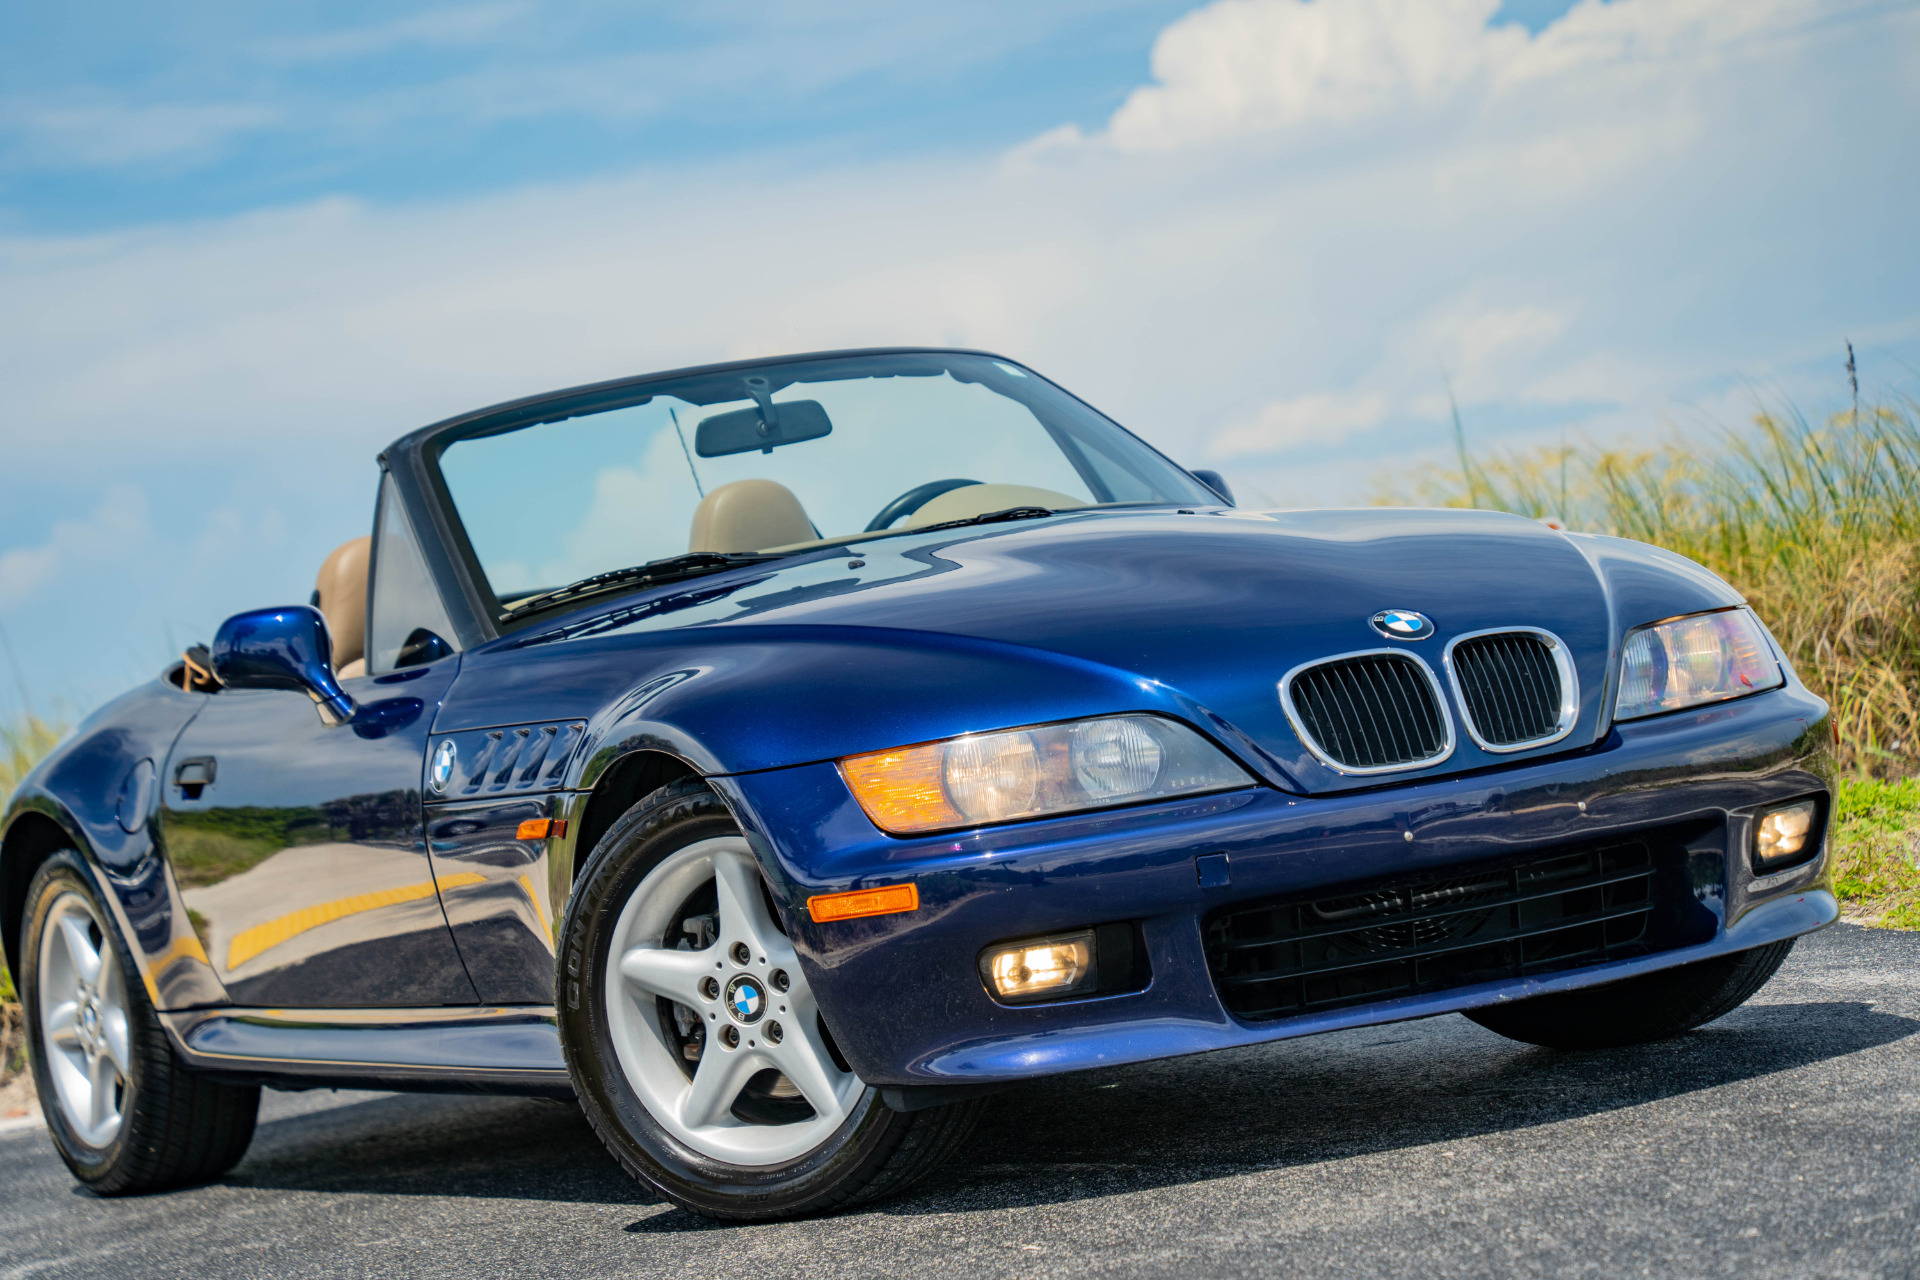 1997 BMW Z3 Specs, Price, MPG & Reviews